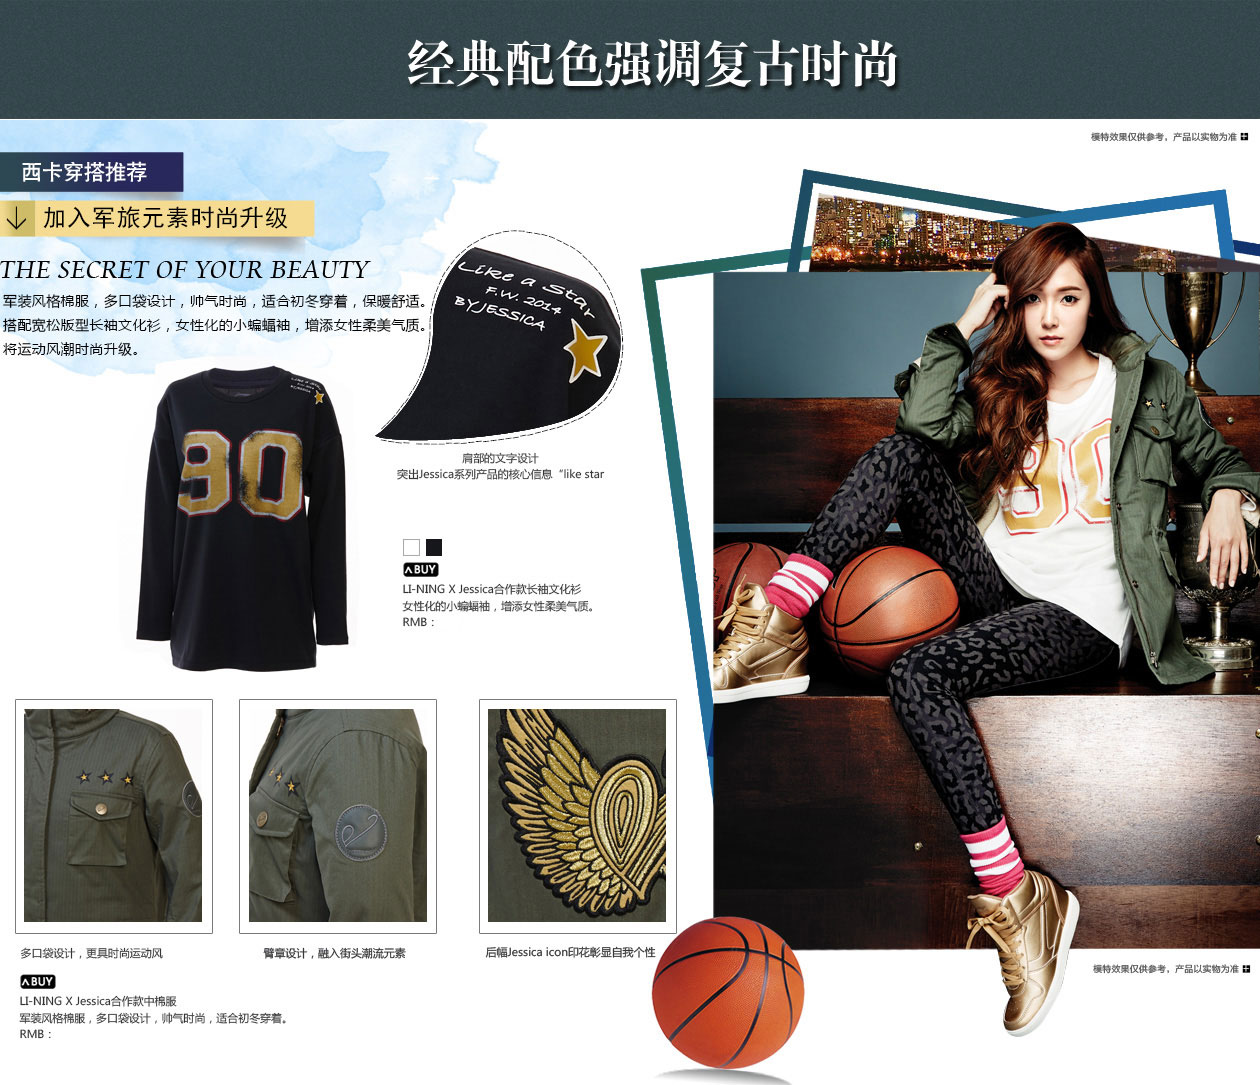 Jessica Li-Ning website pictures